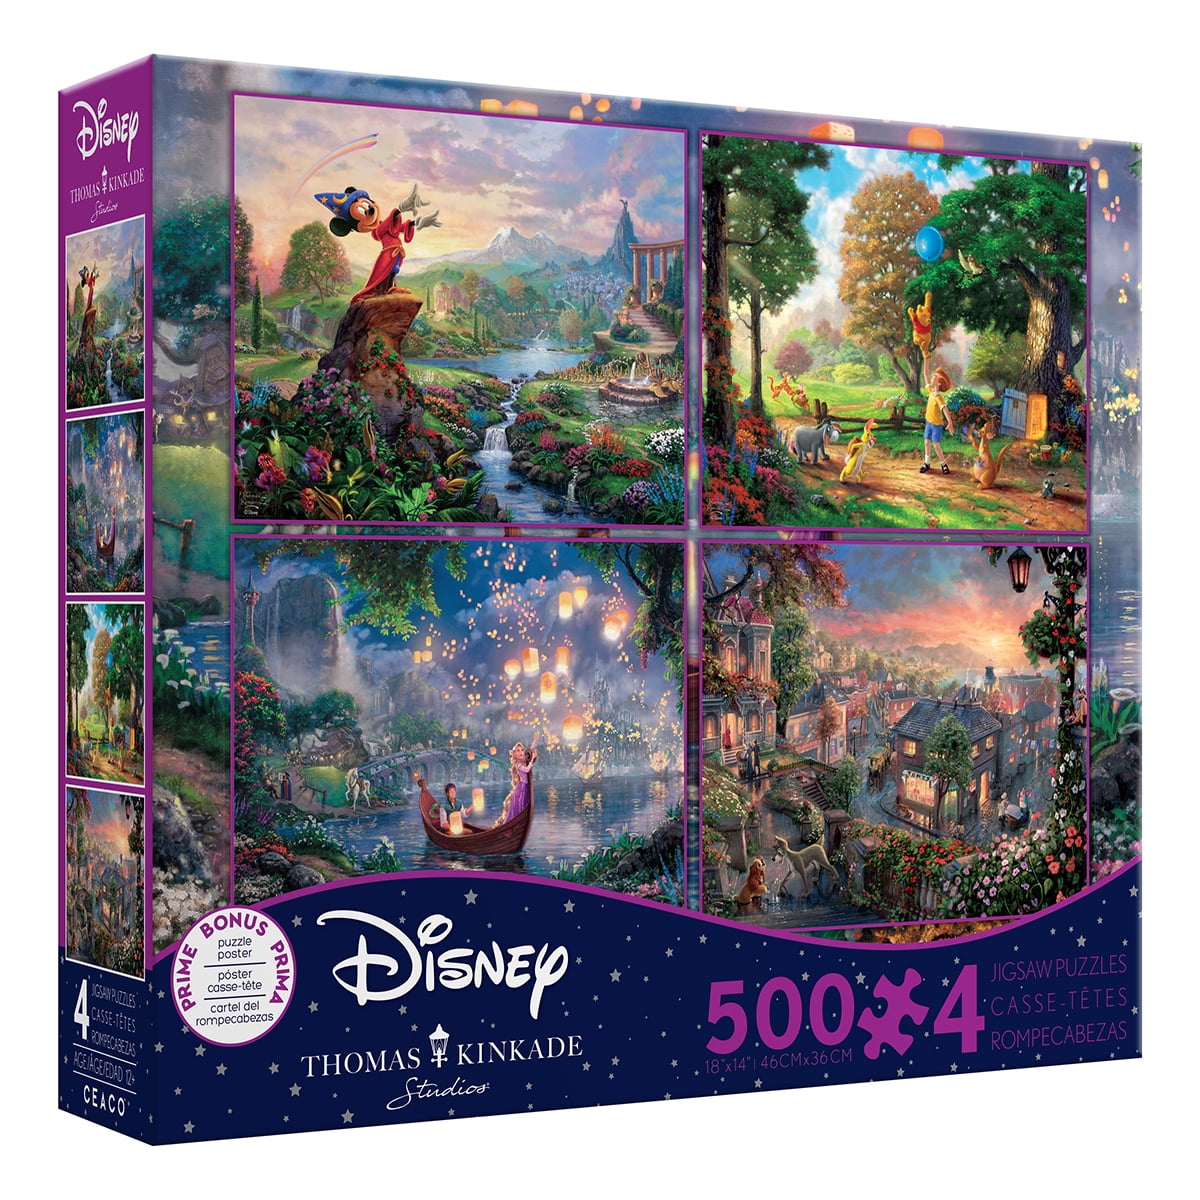 FREE SHIPPING Gorgeous Ceaco "Disney Frozen" Boxless 500 Pc Puzzle Brand New 